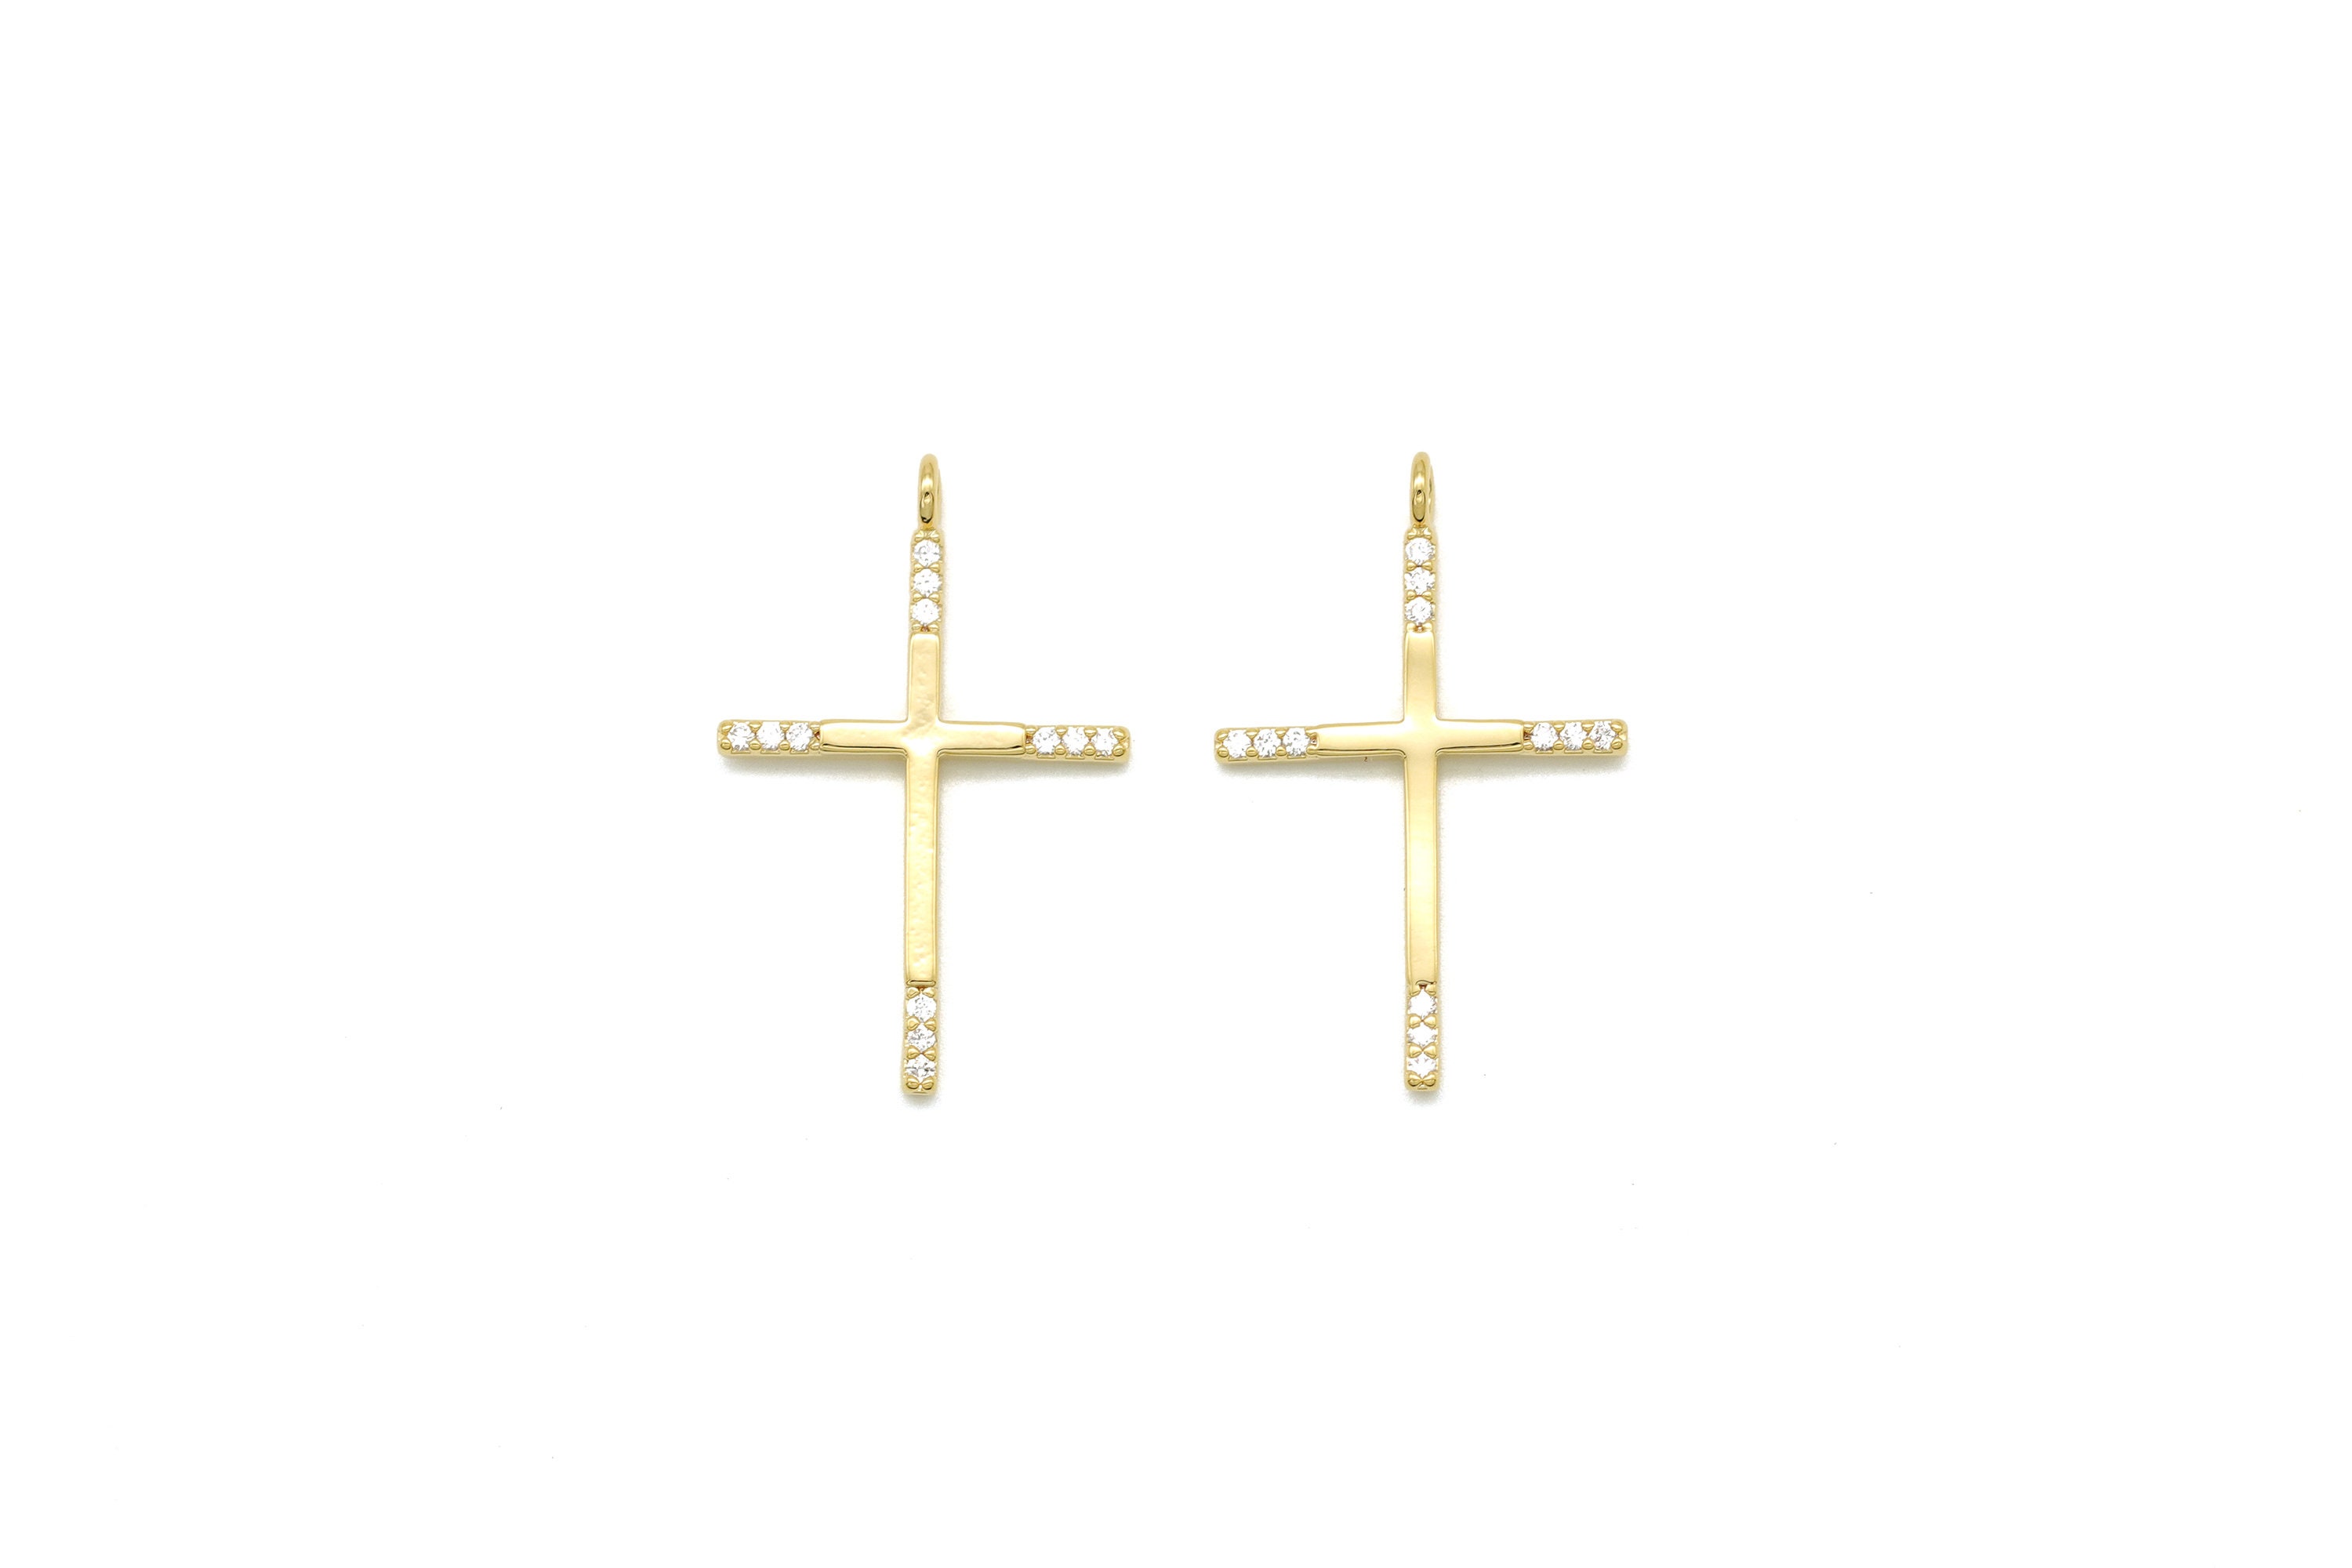 Cubic decorated cross pendant M8-G3 2 pcs 25x16mm 16K gold | Etsy